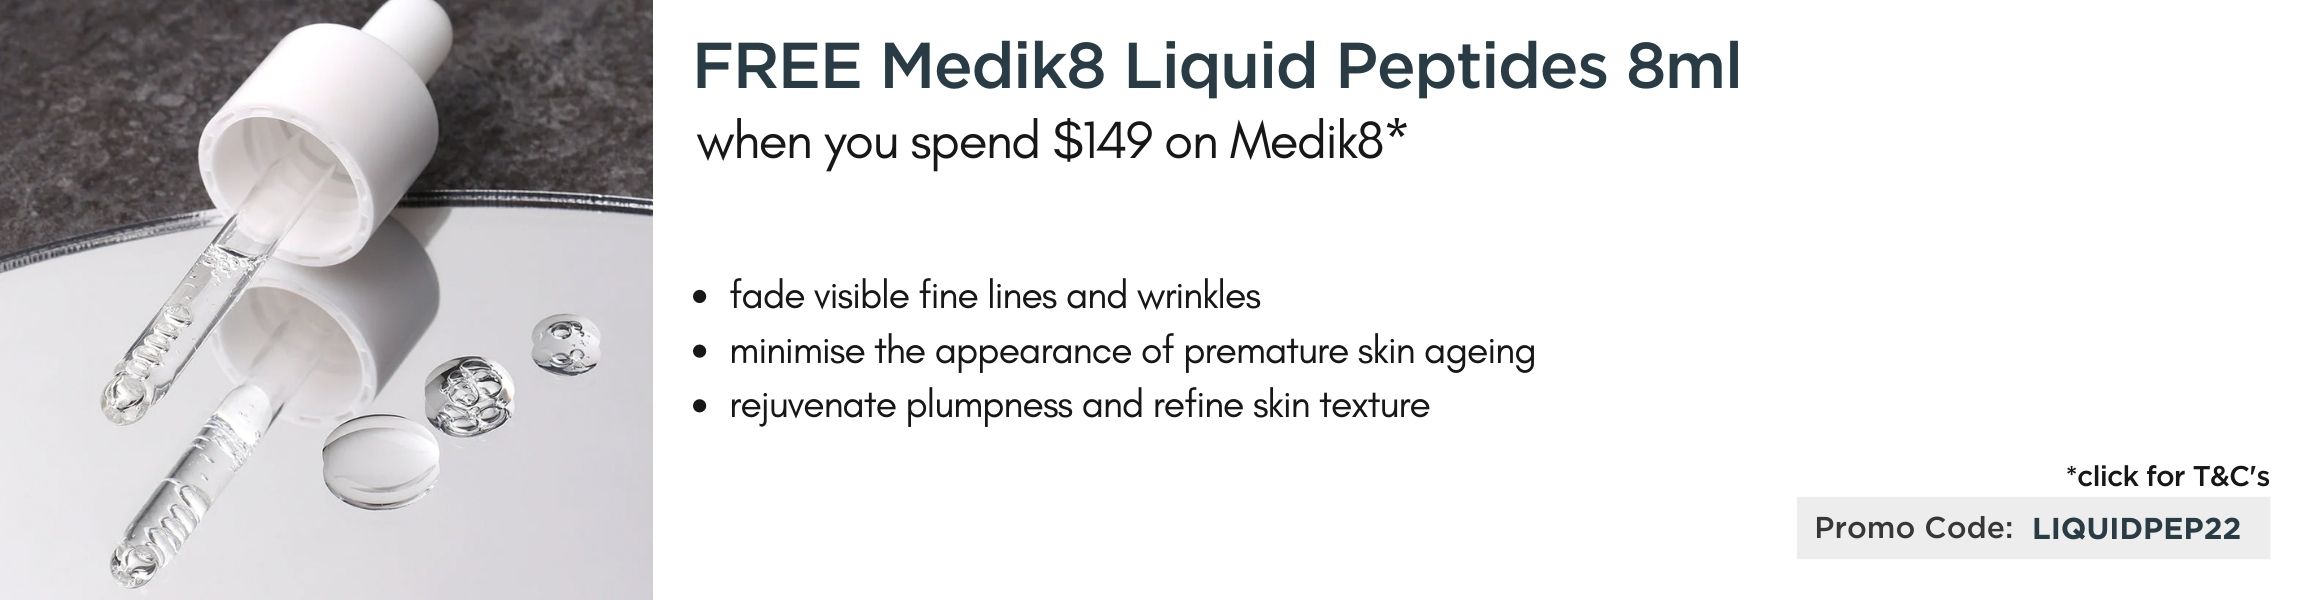 FREE Medik8 Liquid Peptides 8ml when you spend $149 on Medik8